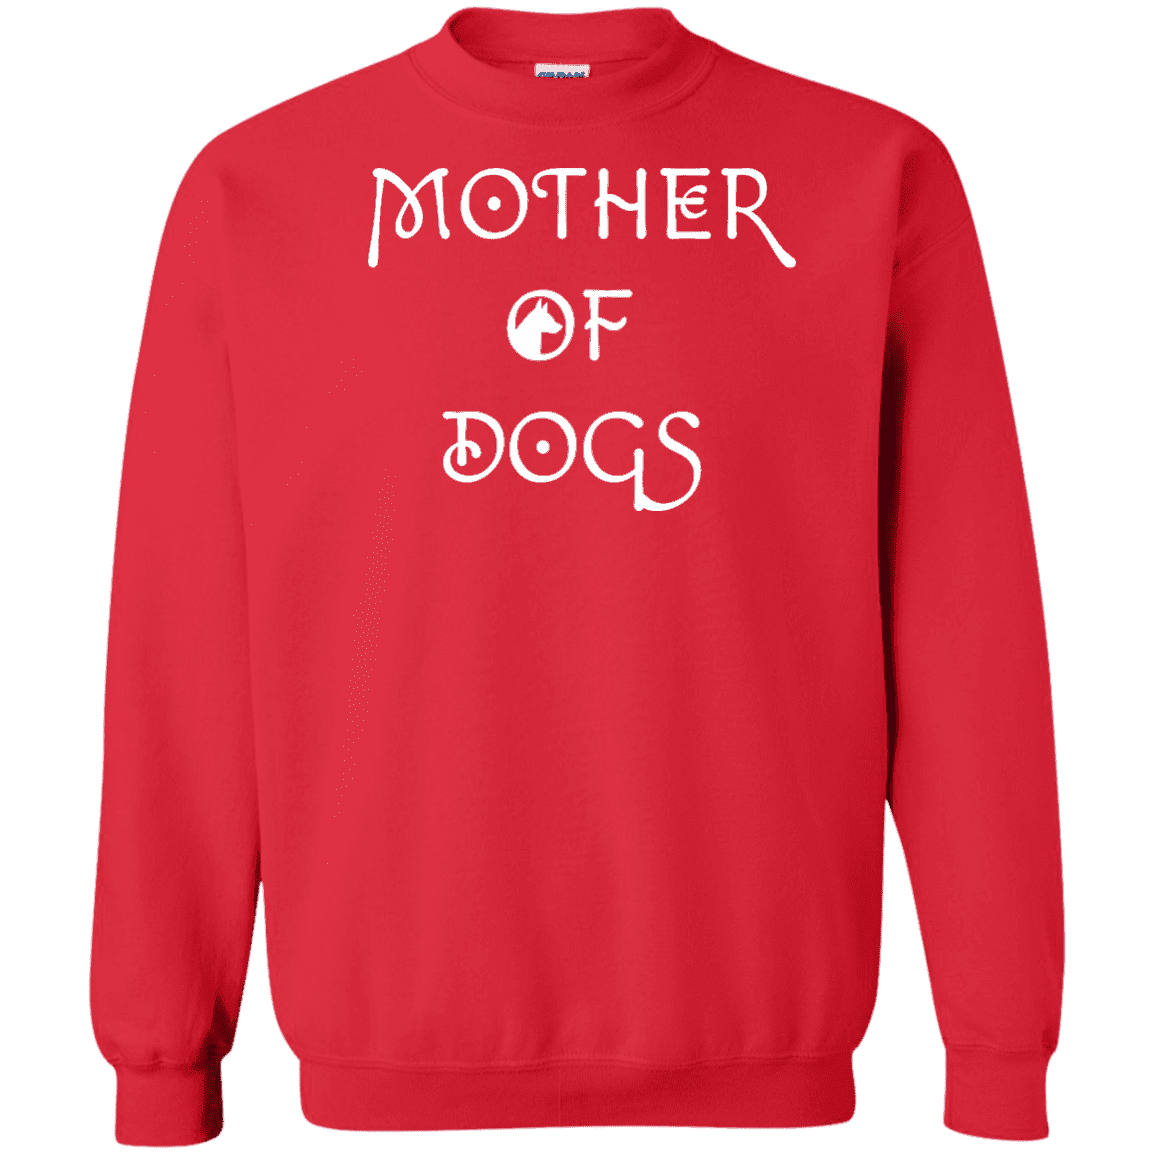 Mother Of Dogs - Sweatshirt.